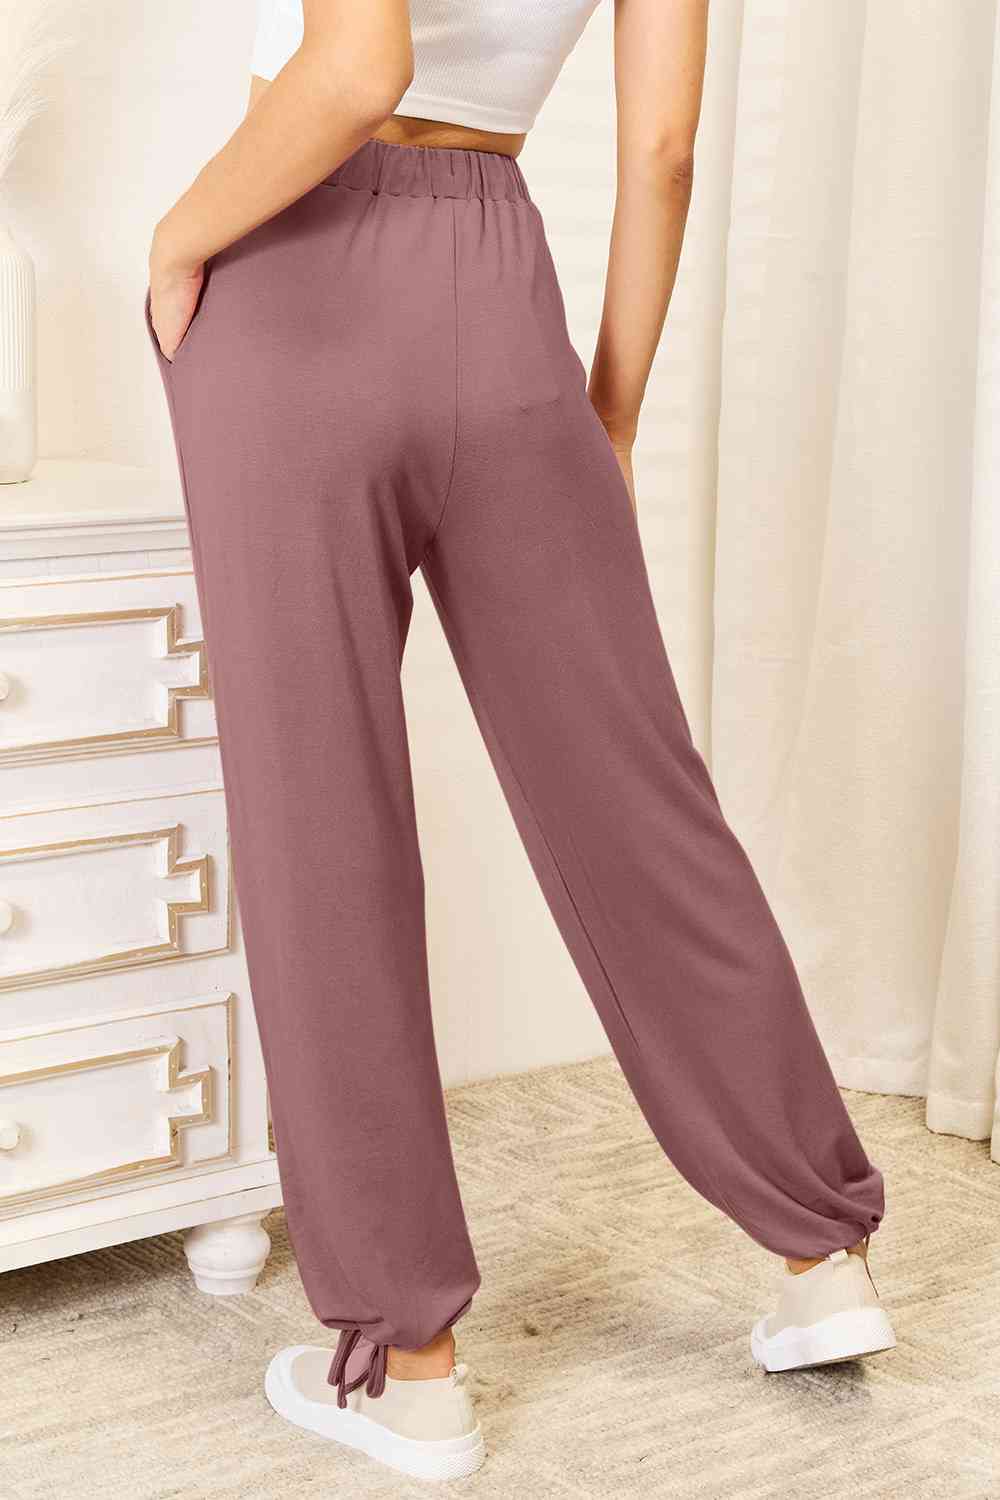 Basic Bae - 3 Colors - Full Size Soft Rayon Drawstring Waist Pants with Pockets - Sizes S-3XL Ti Amo I love you